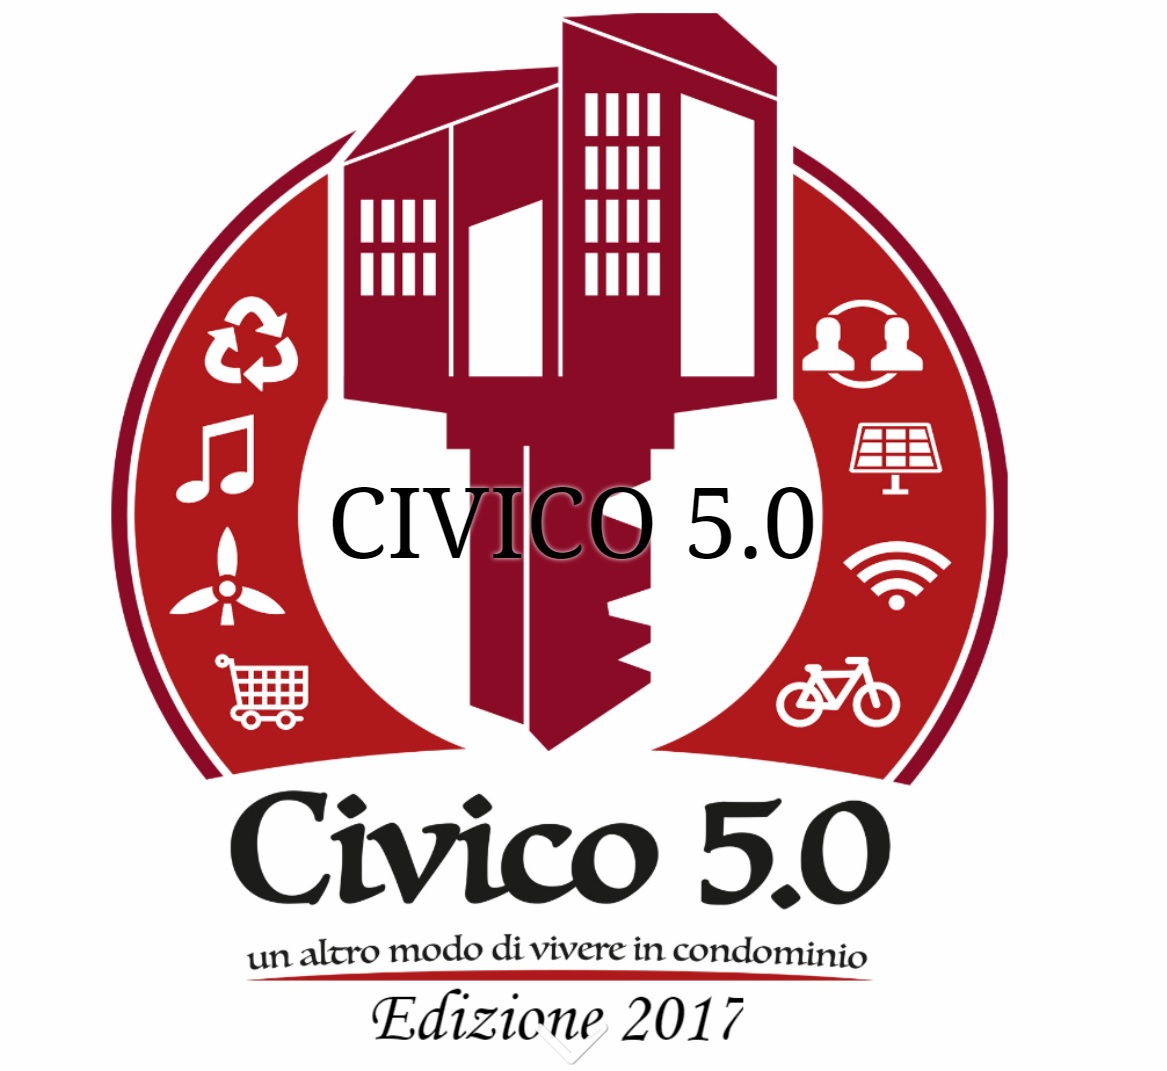 Civico 5